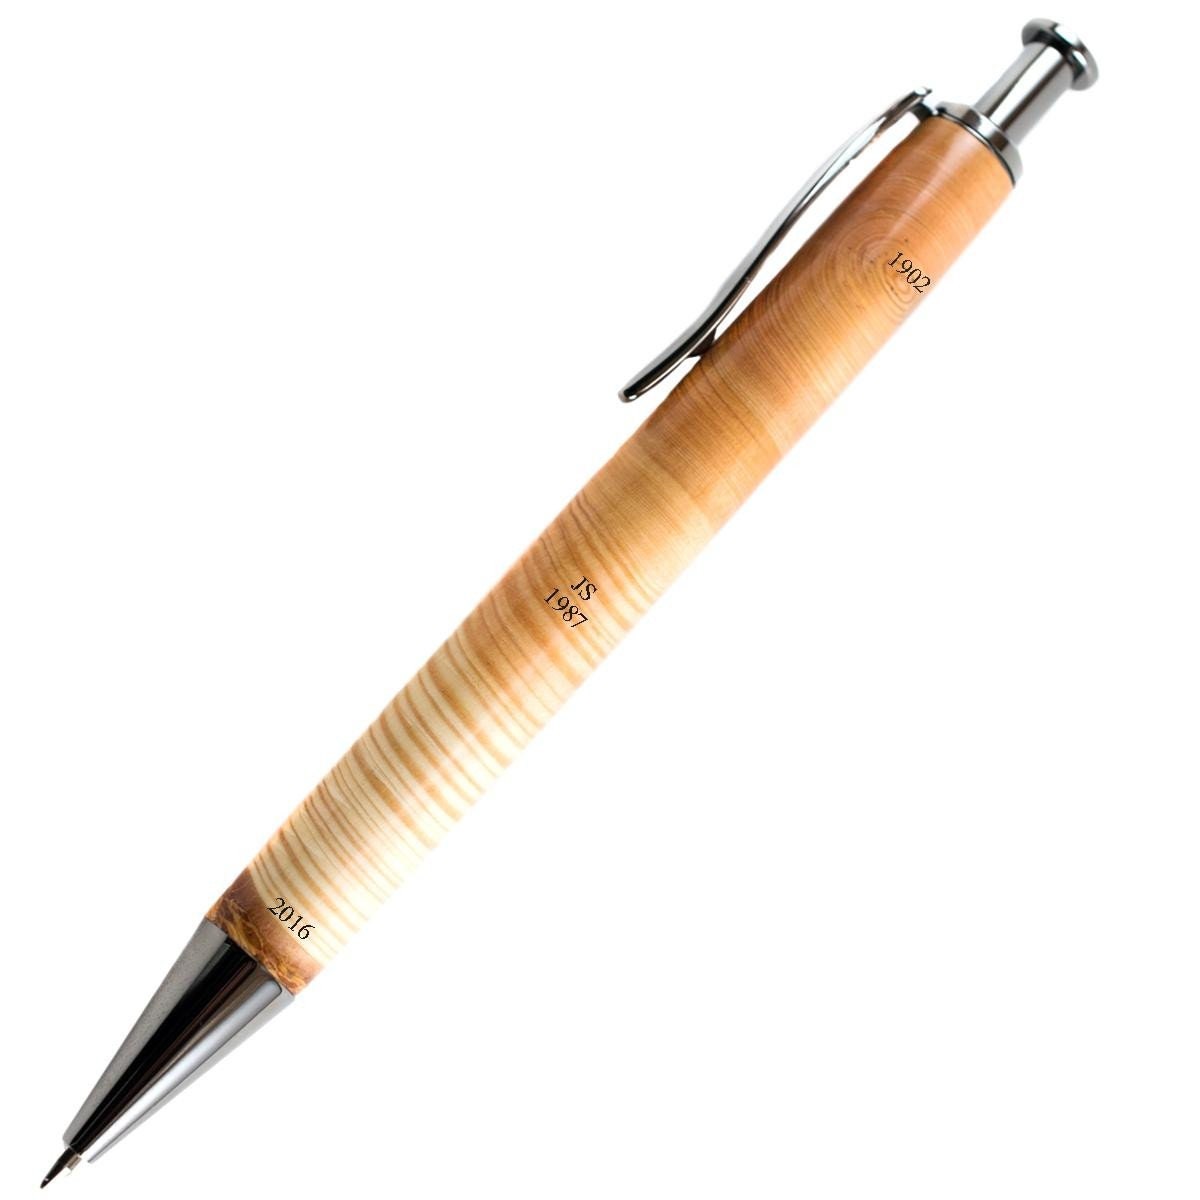 Handcrafted wood ballpoint pen